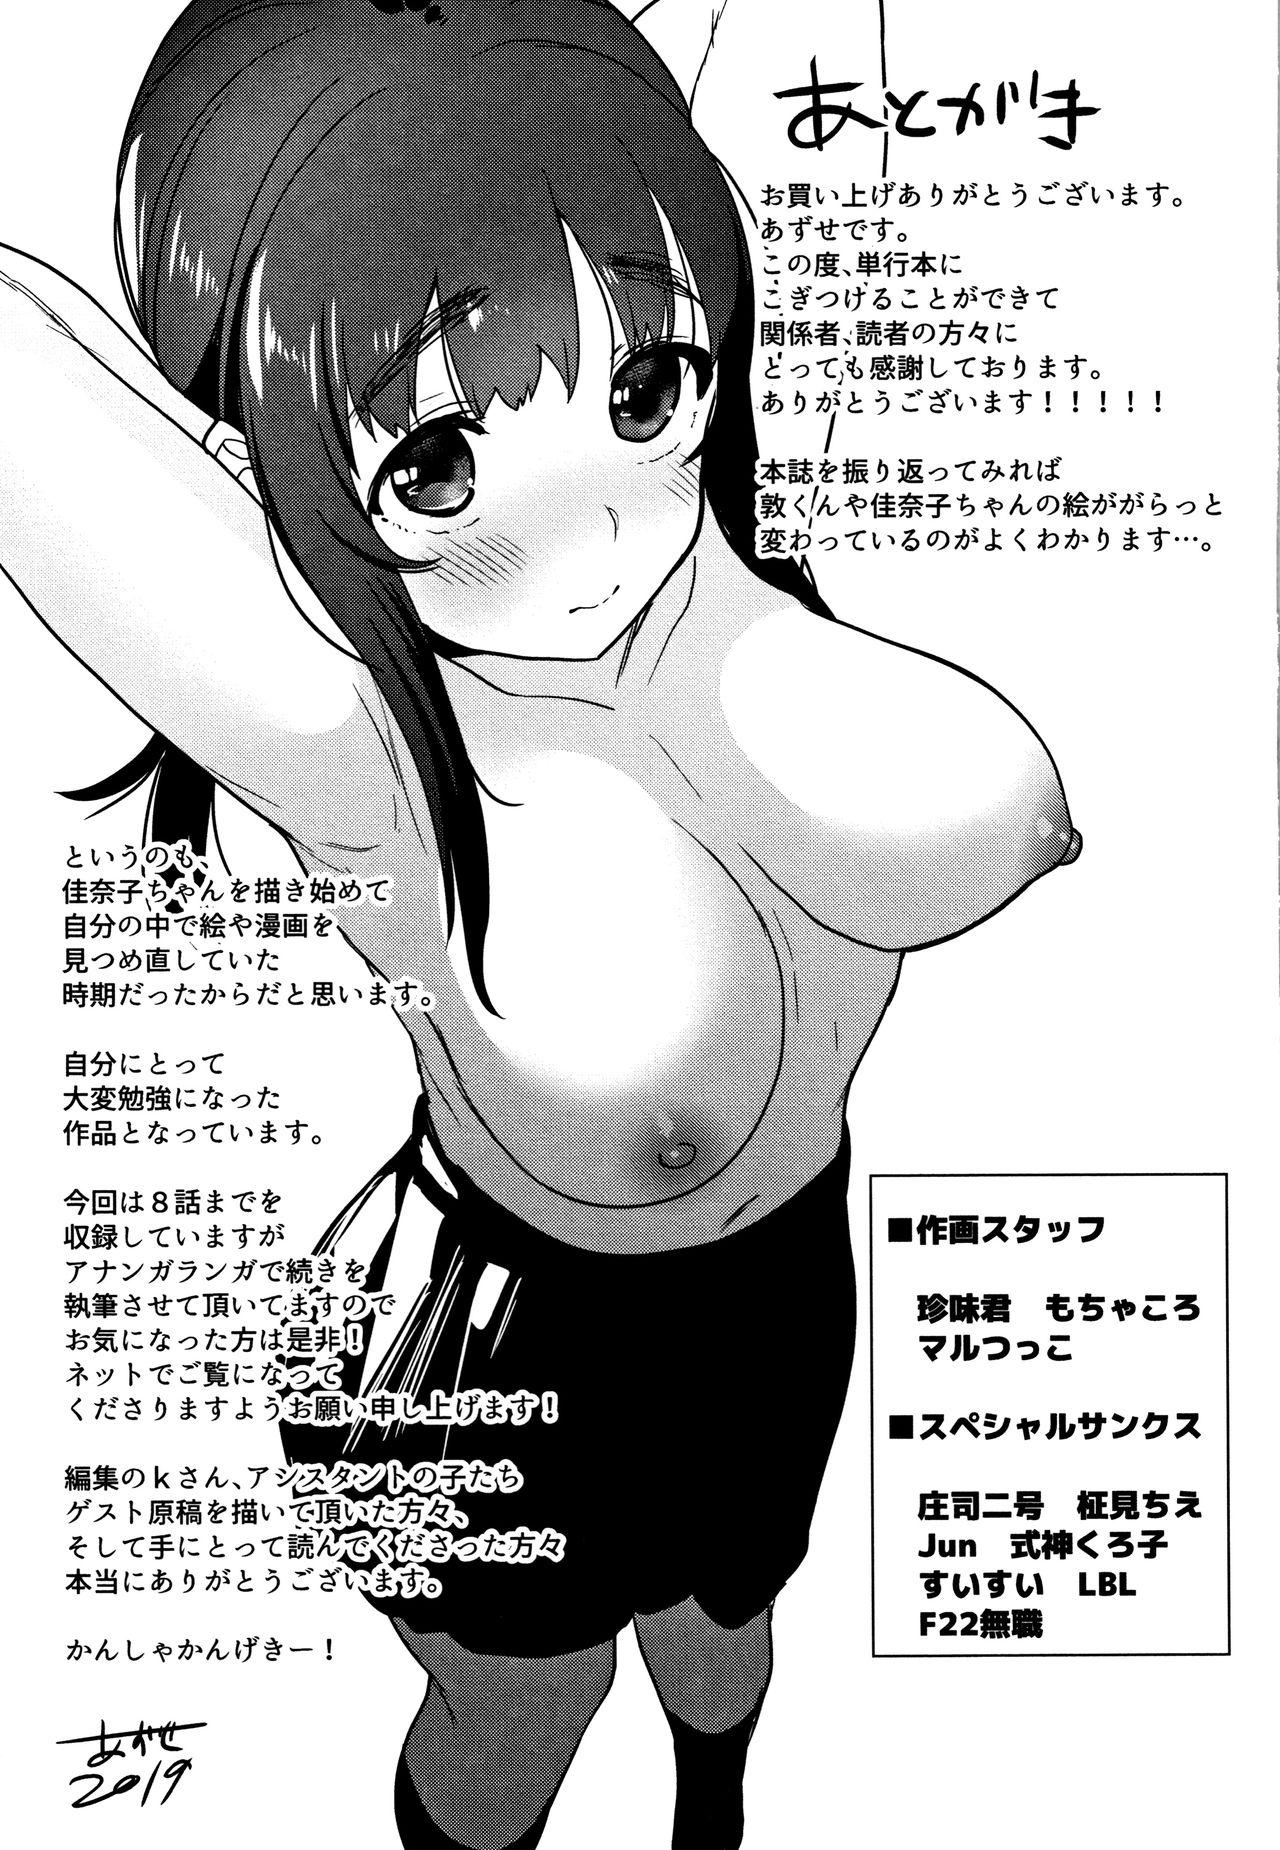 Kawaii Onnanoko o Tsuru Houhou - Method to catch a pretty girl 211